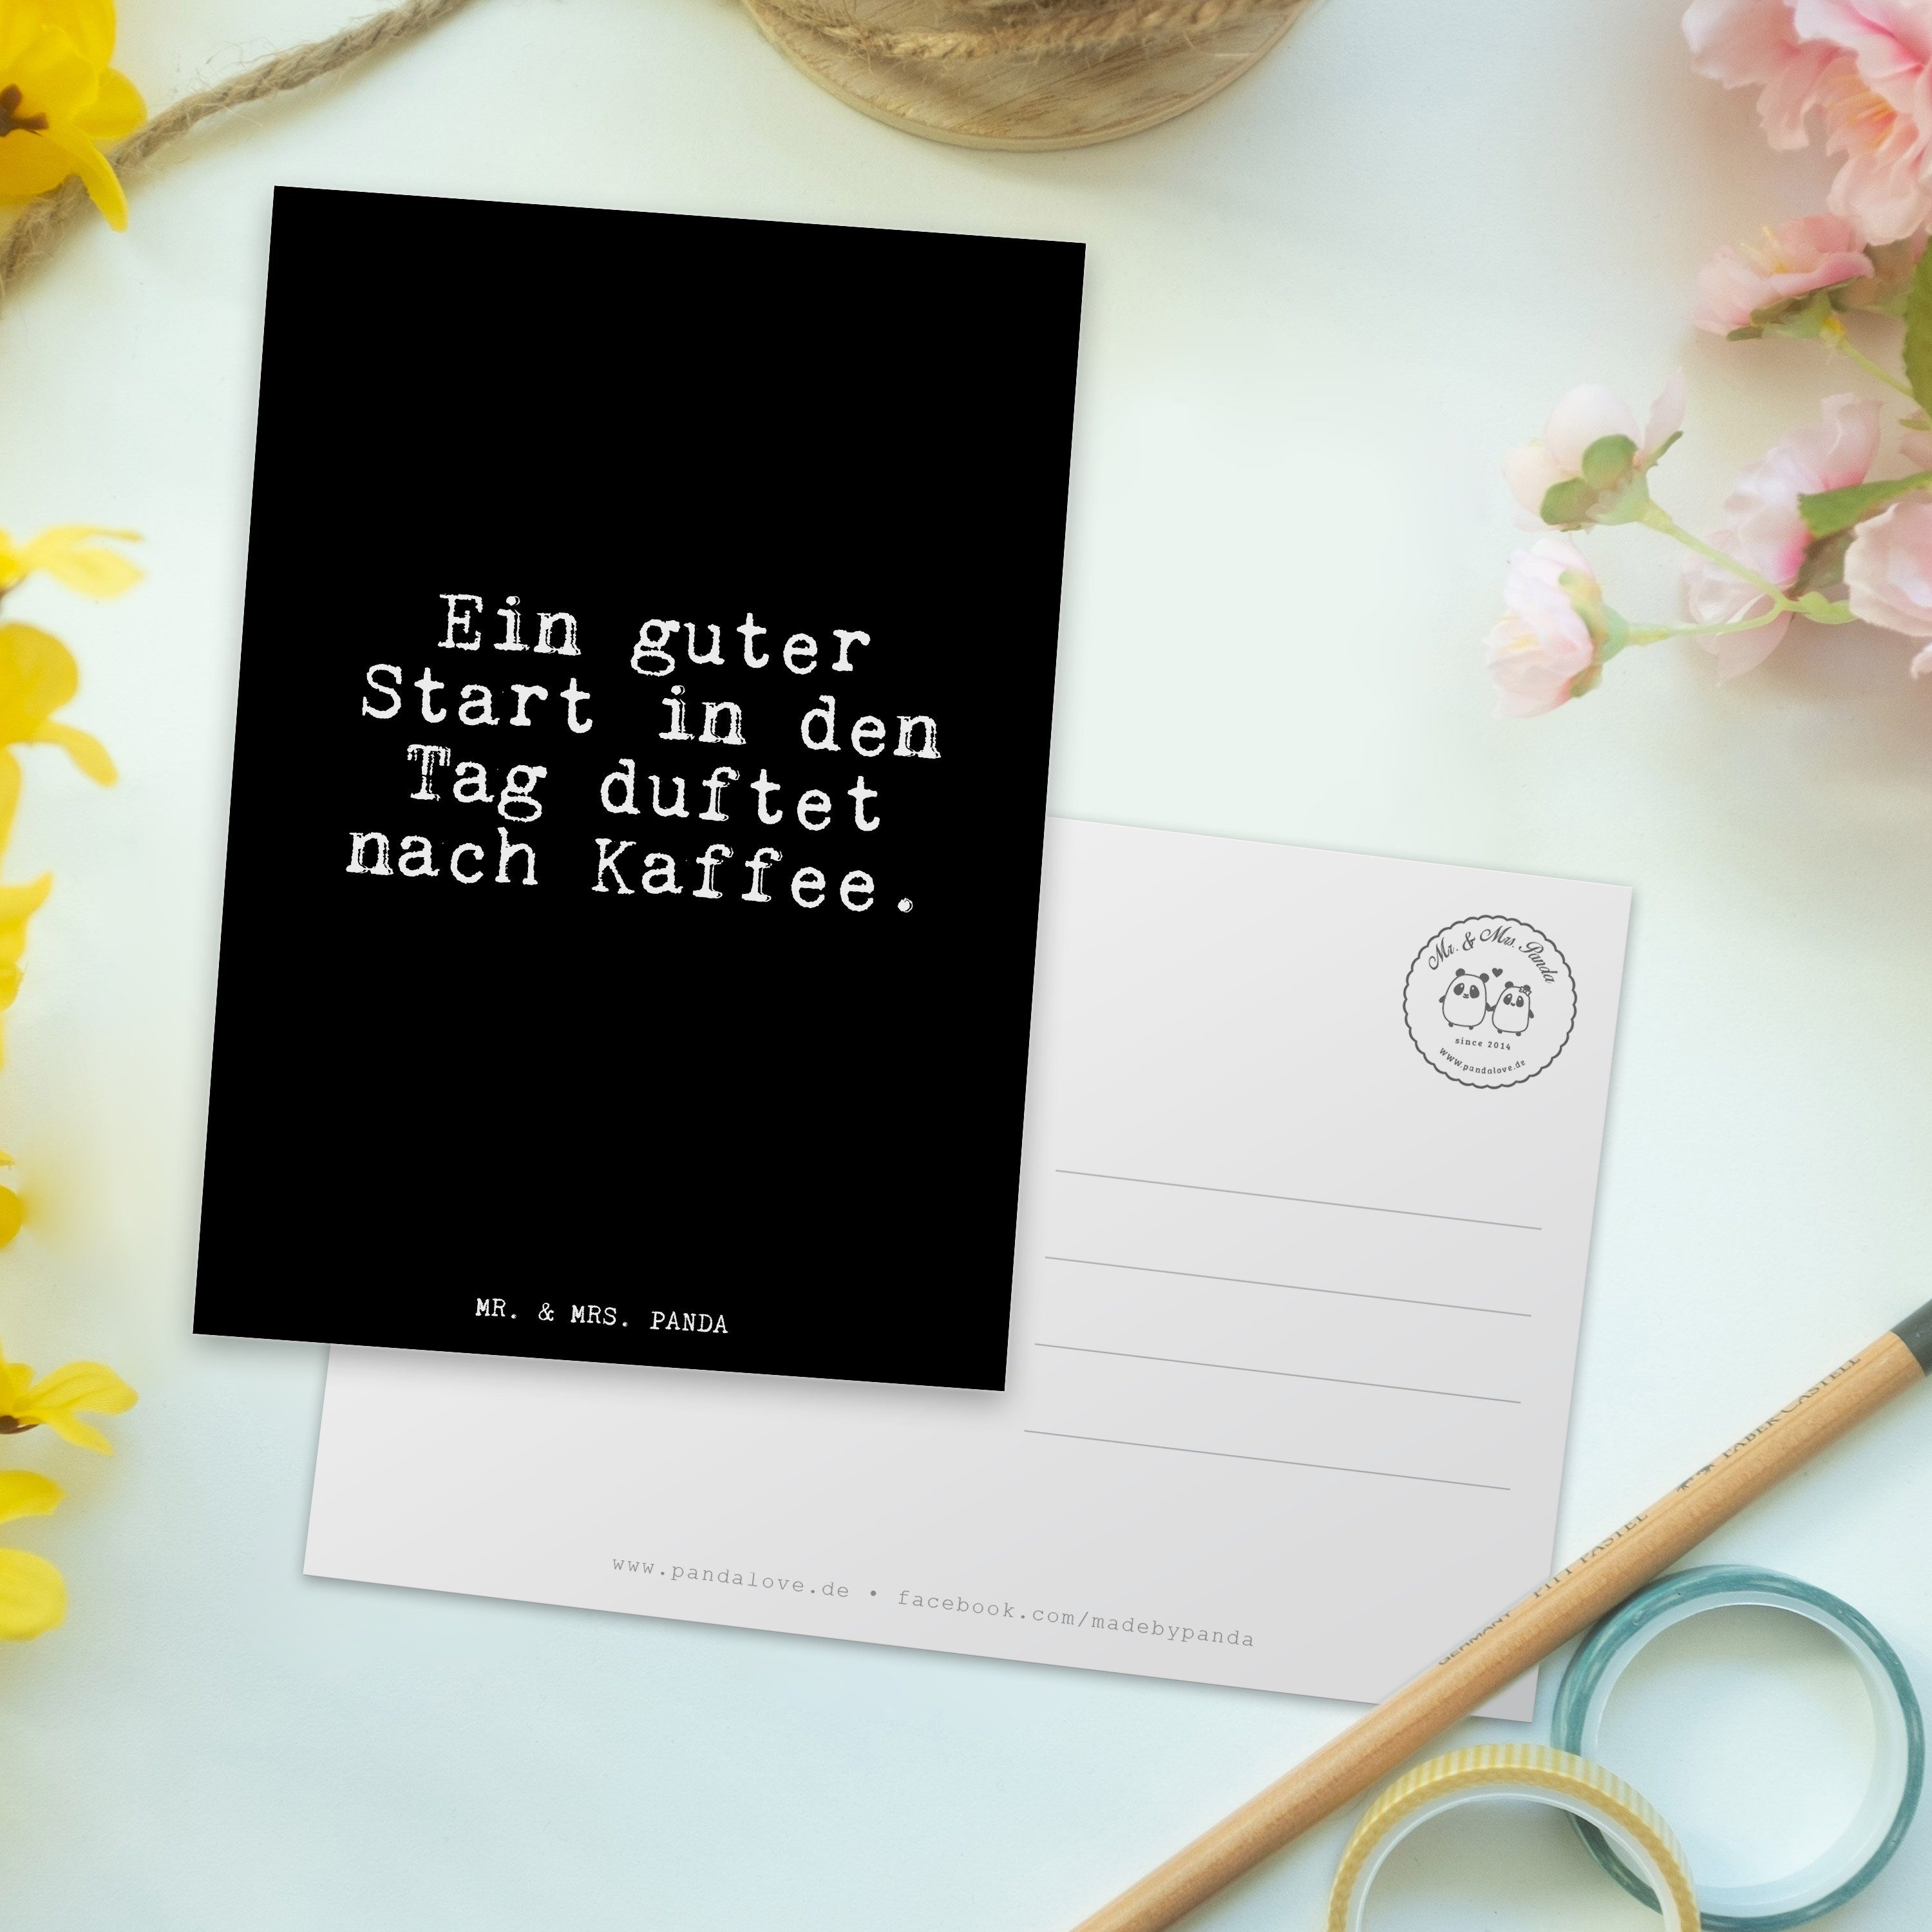 Mr. & Mrs. Panda Postkarte Geschenk Kaffee Ein Geschenk, Freundin, Start Schwarz in... guter - 